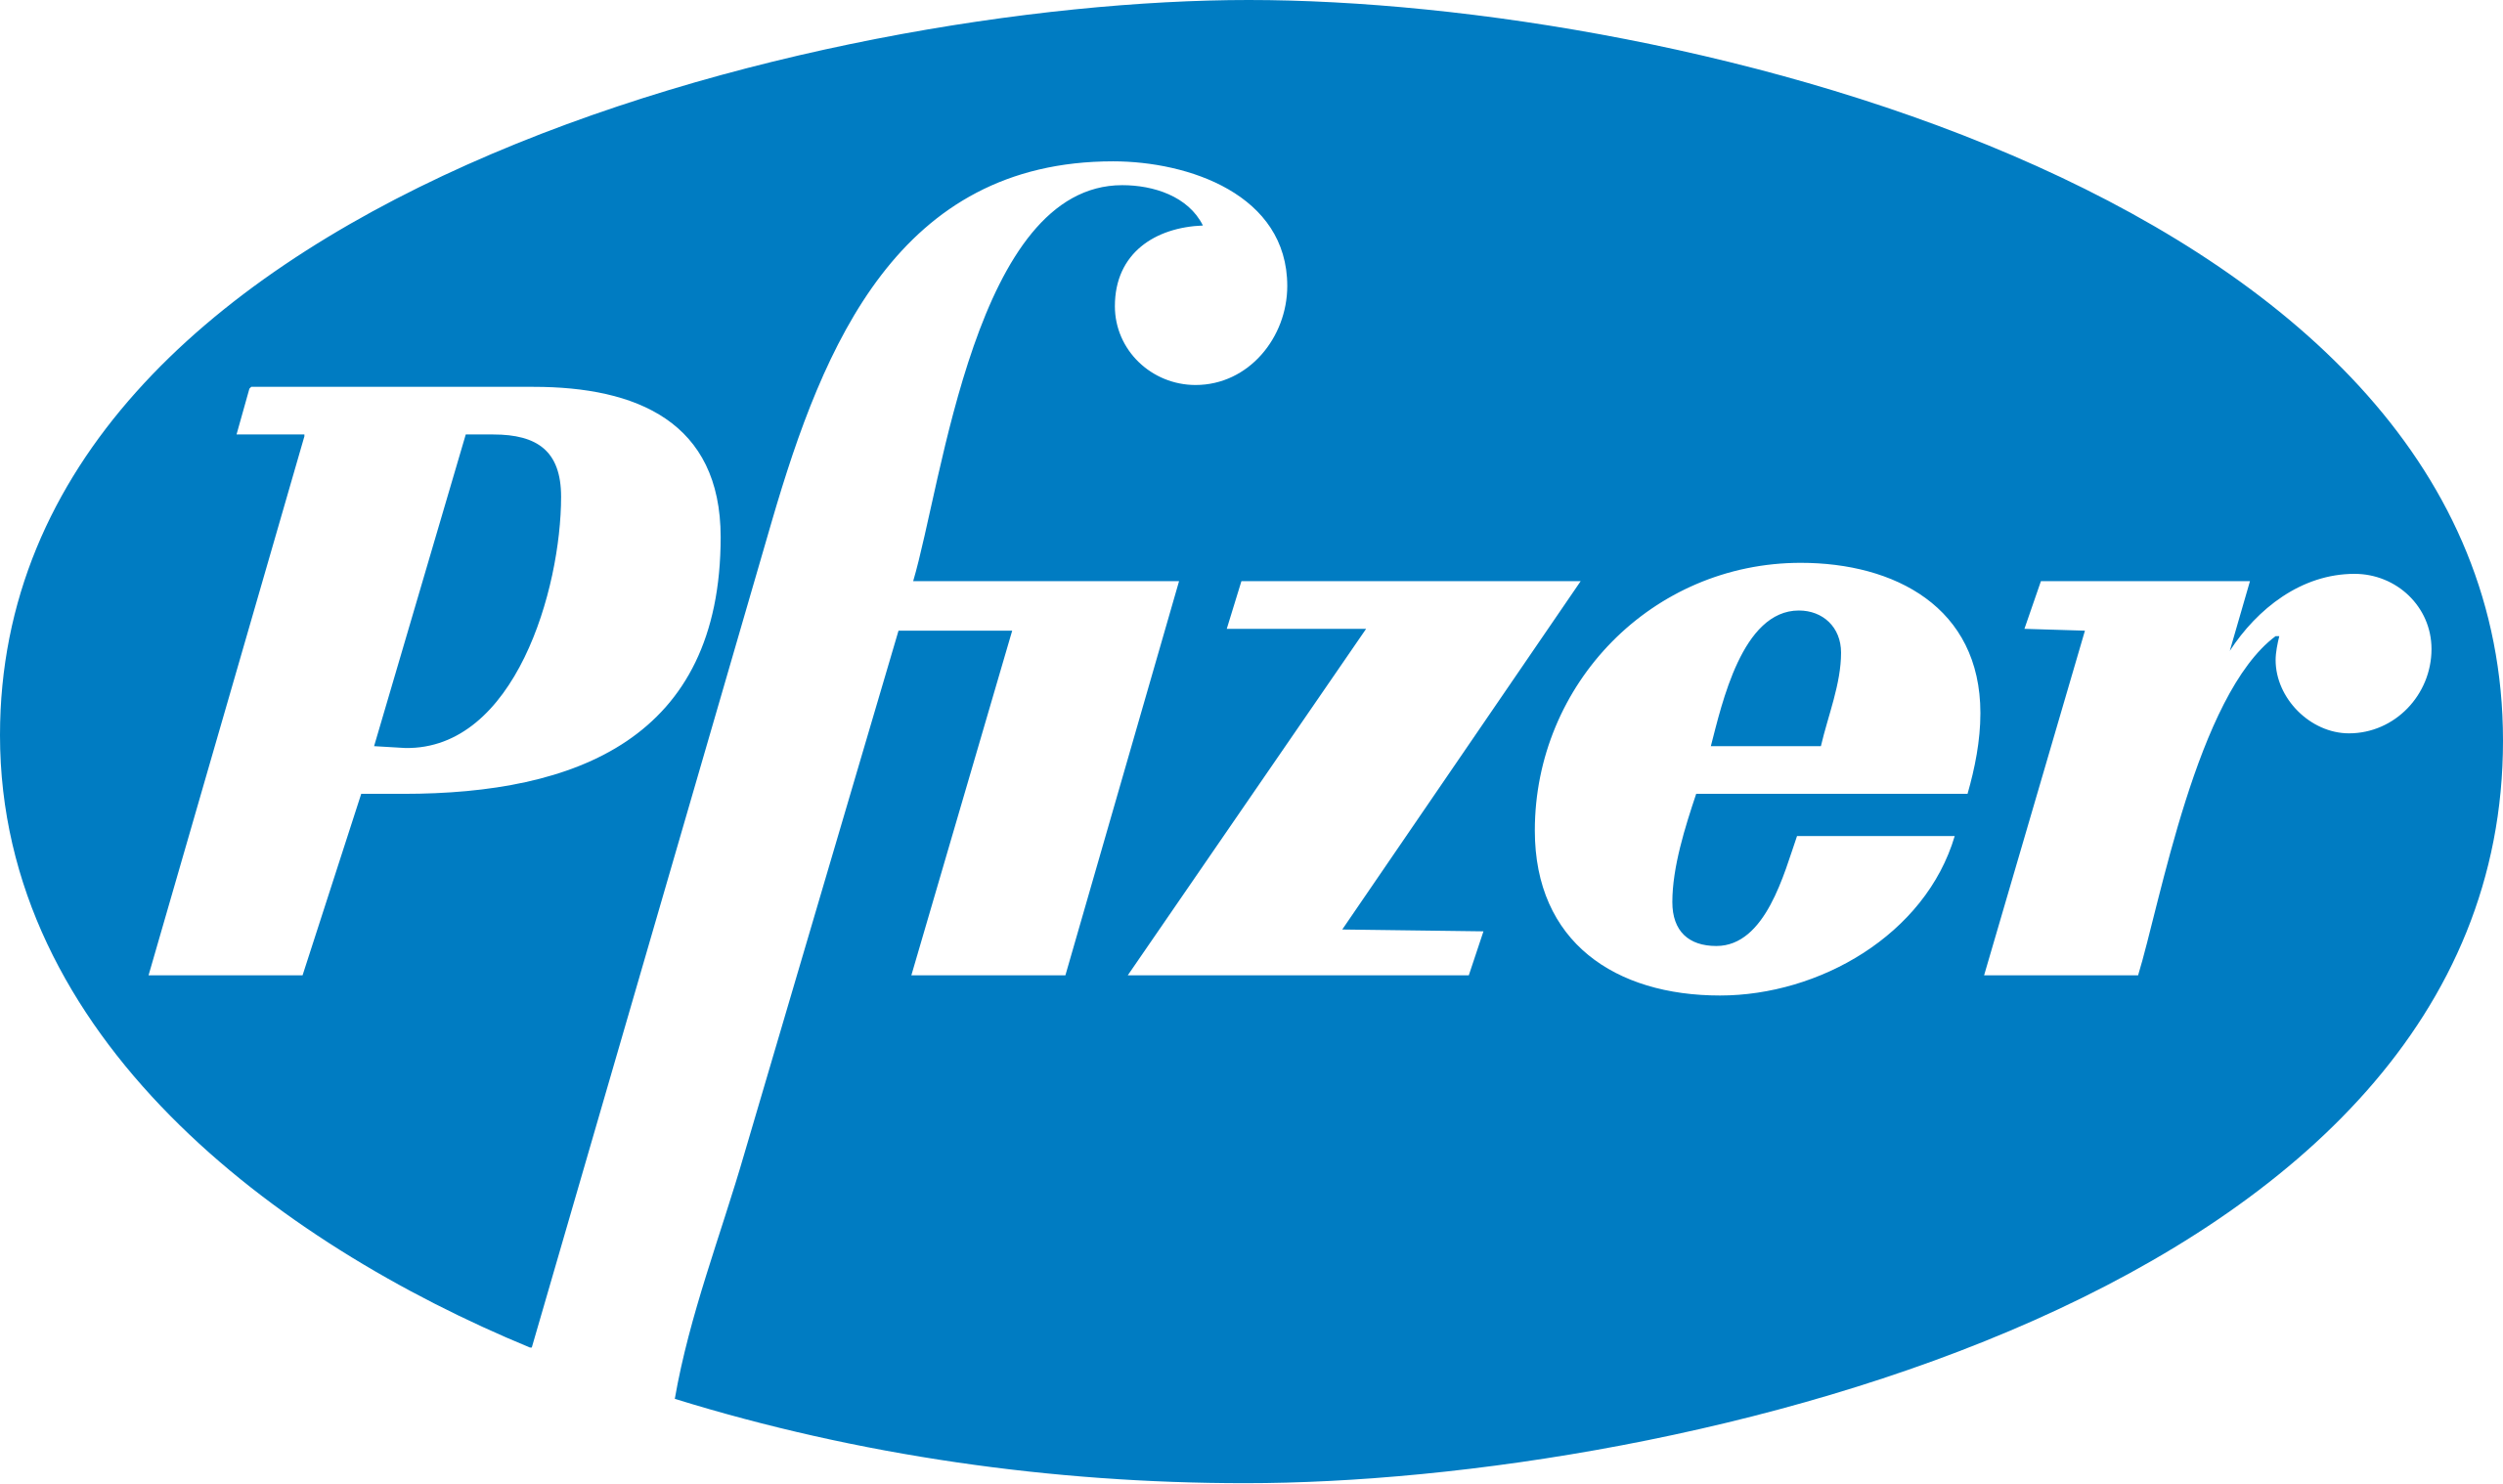  Pfizer logo